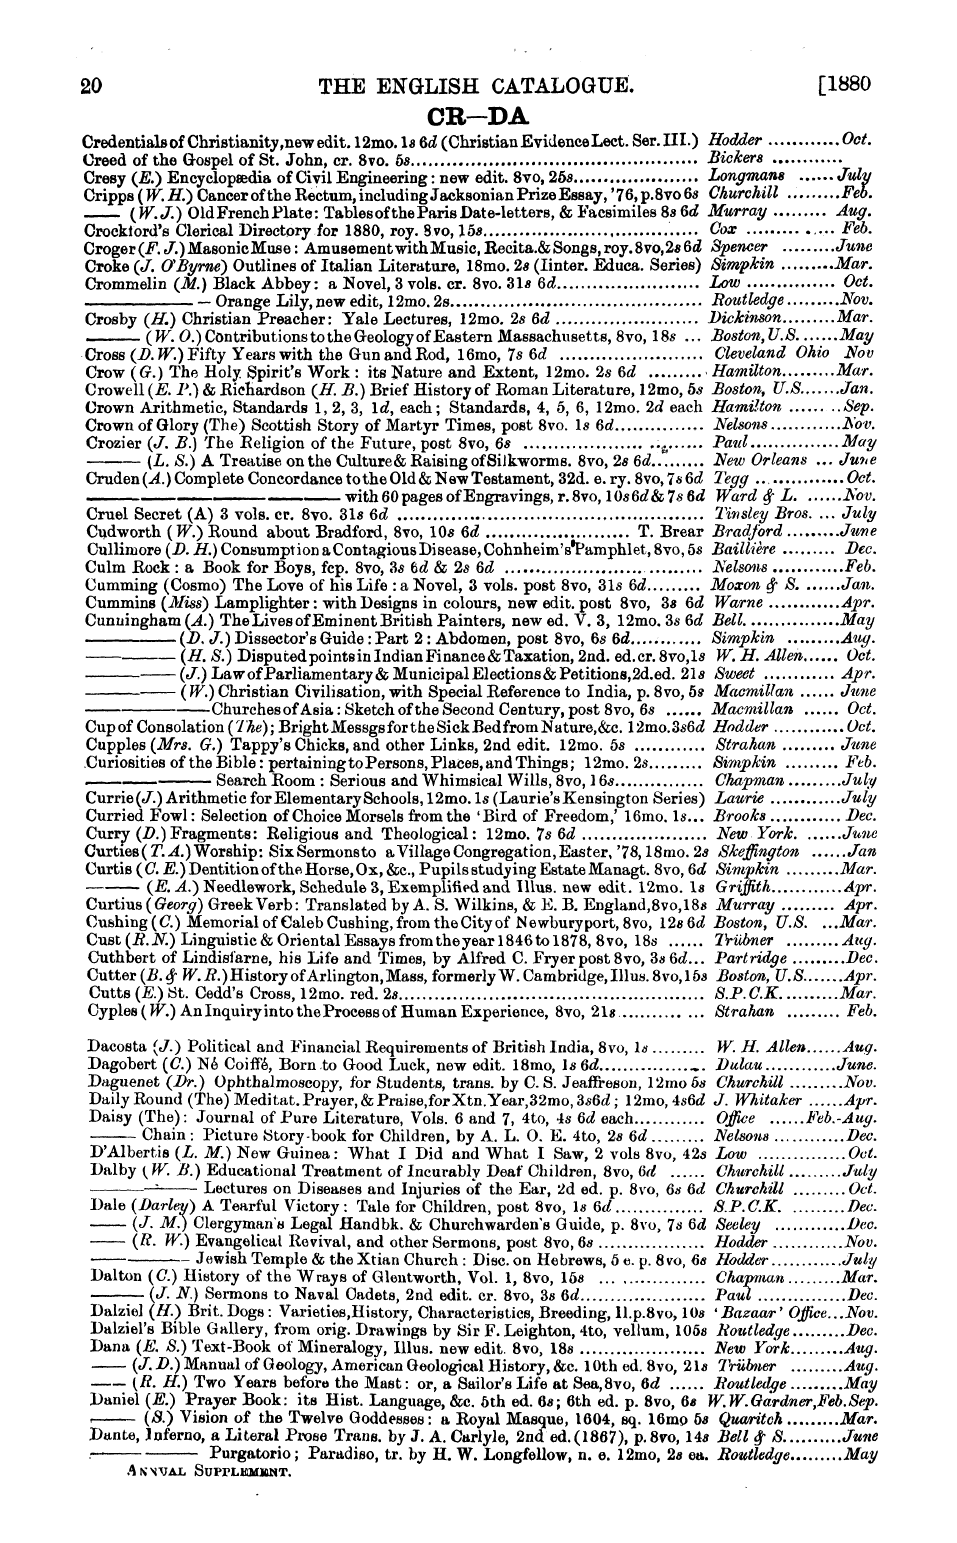 Publishers’ Circular (1880-1890): jS F Y, 1st edition: 21